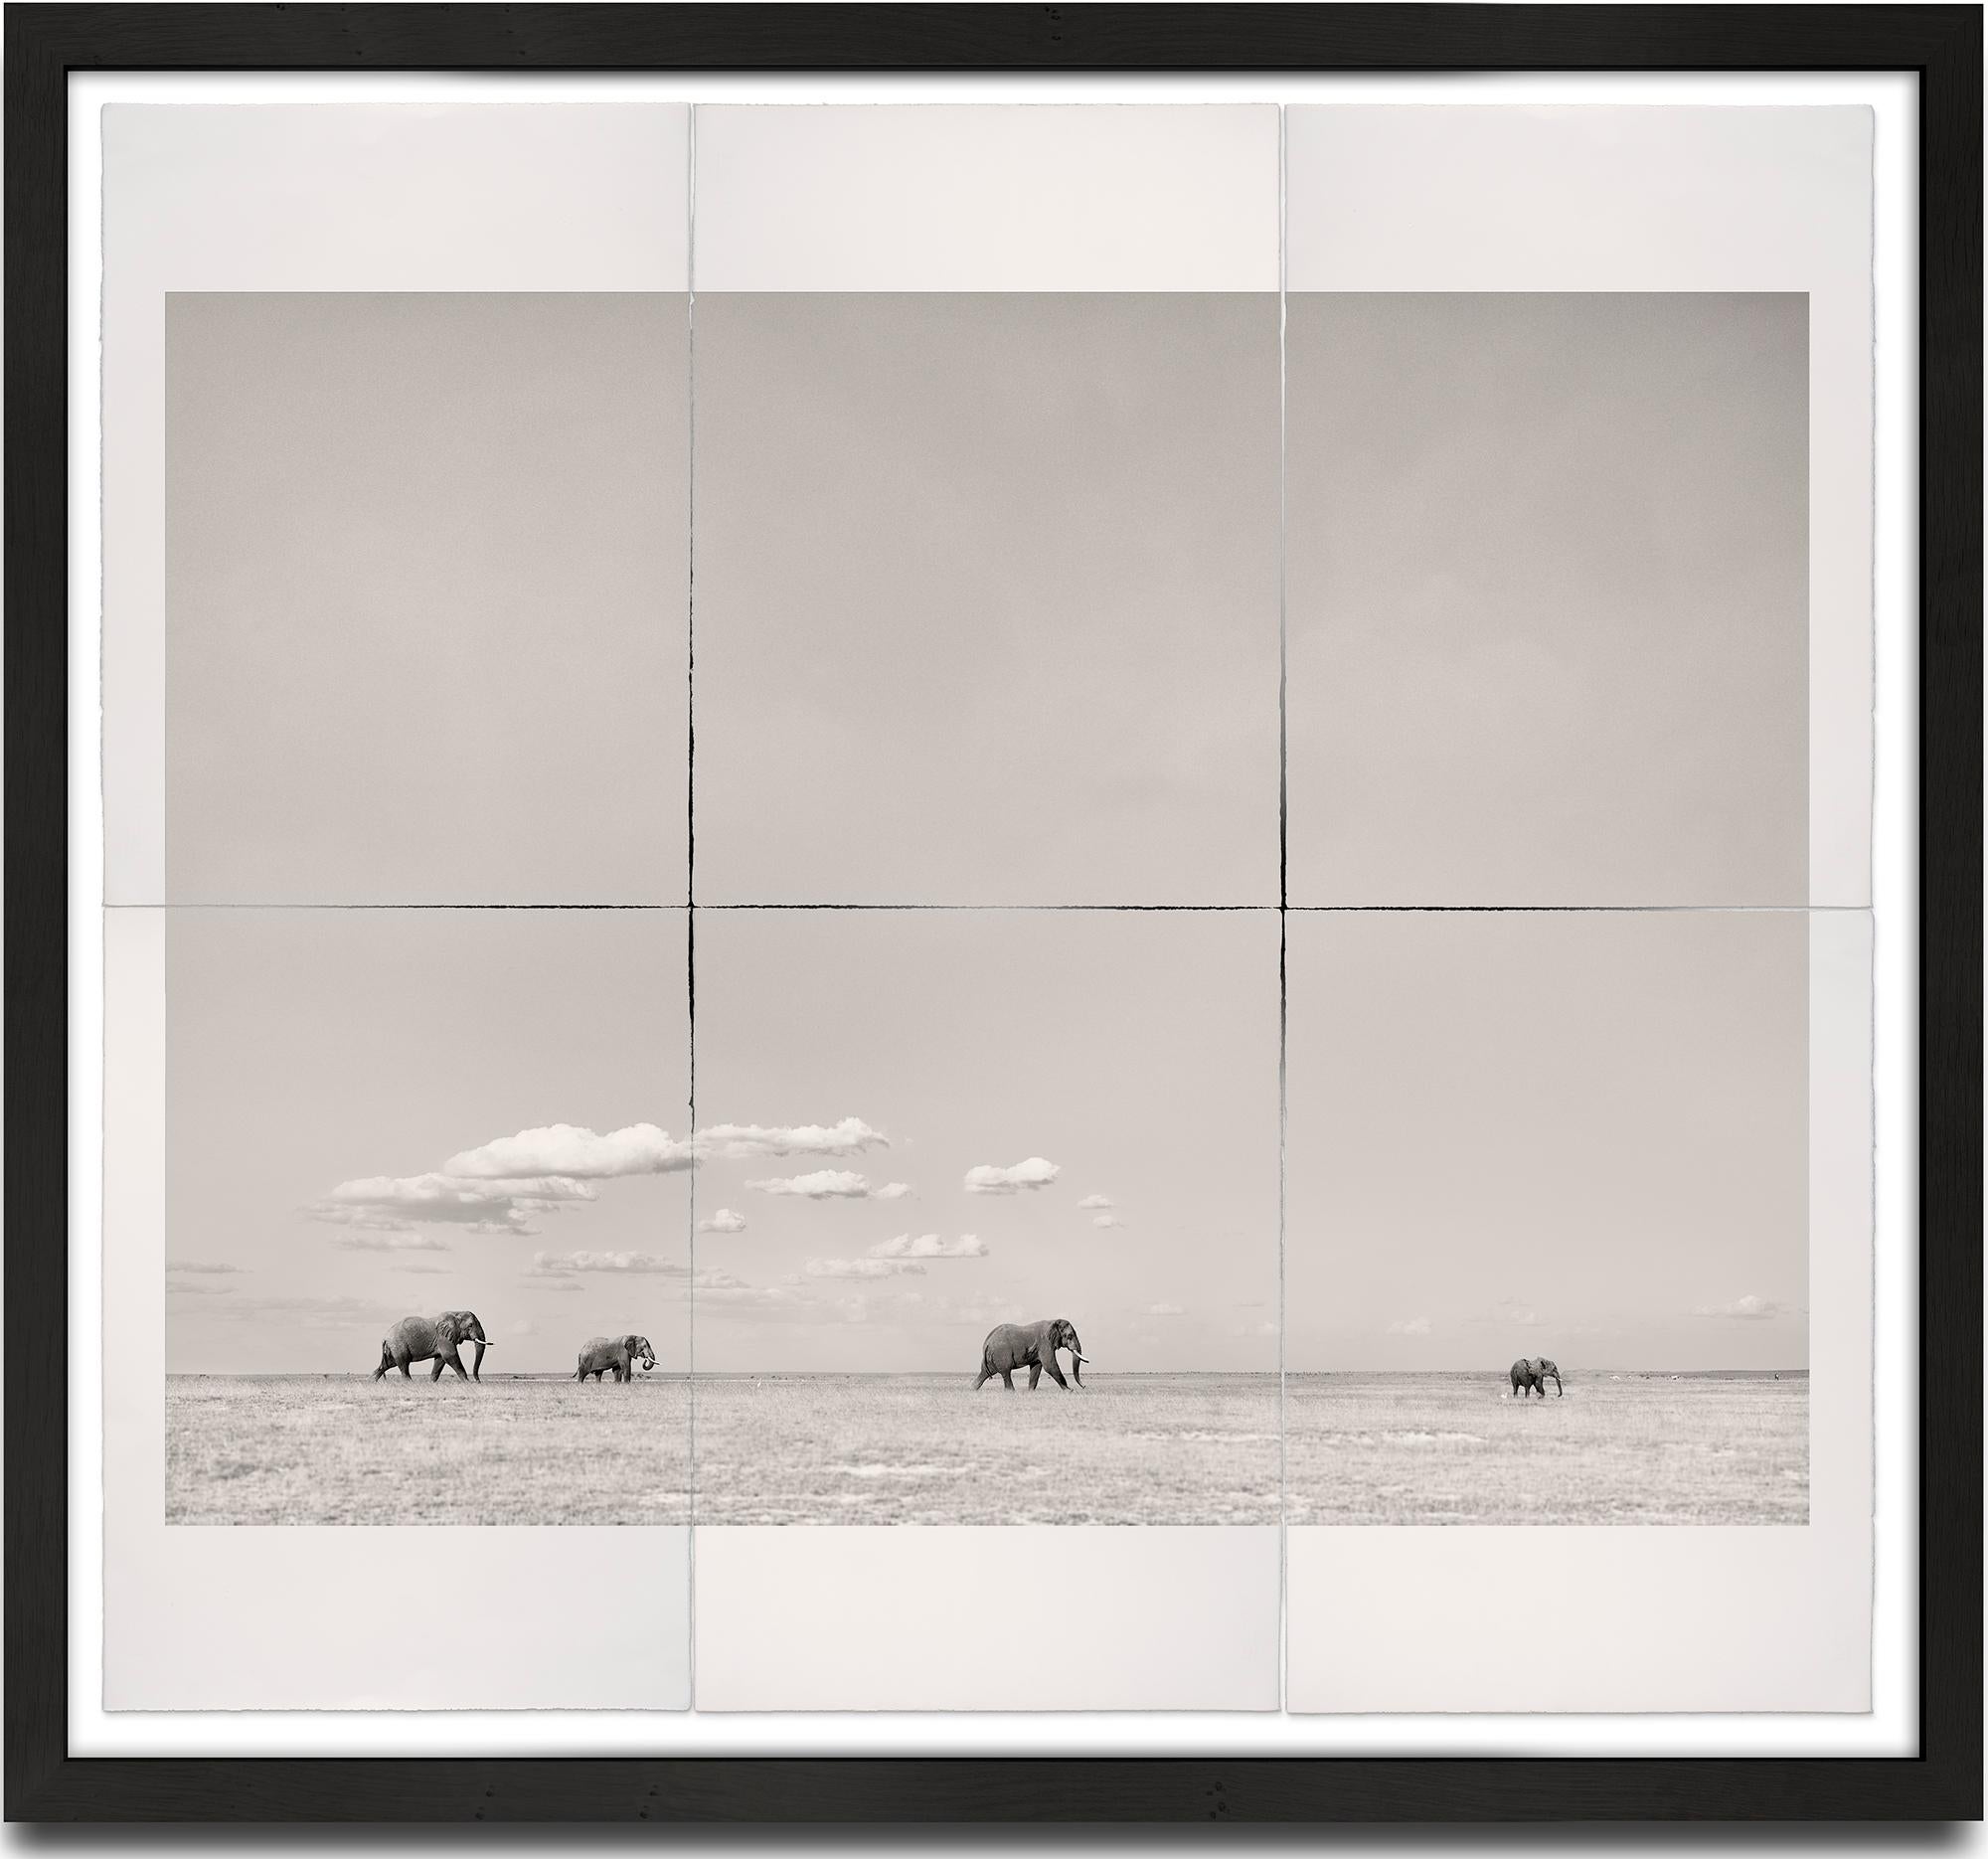 Joachim Schmeisser Landscape Photograph - Tomorrow's Leader, Platinum, animal, elephant, black and white photography